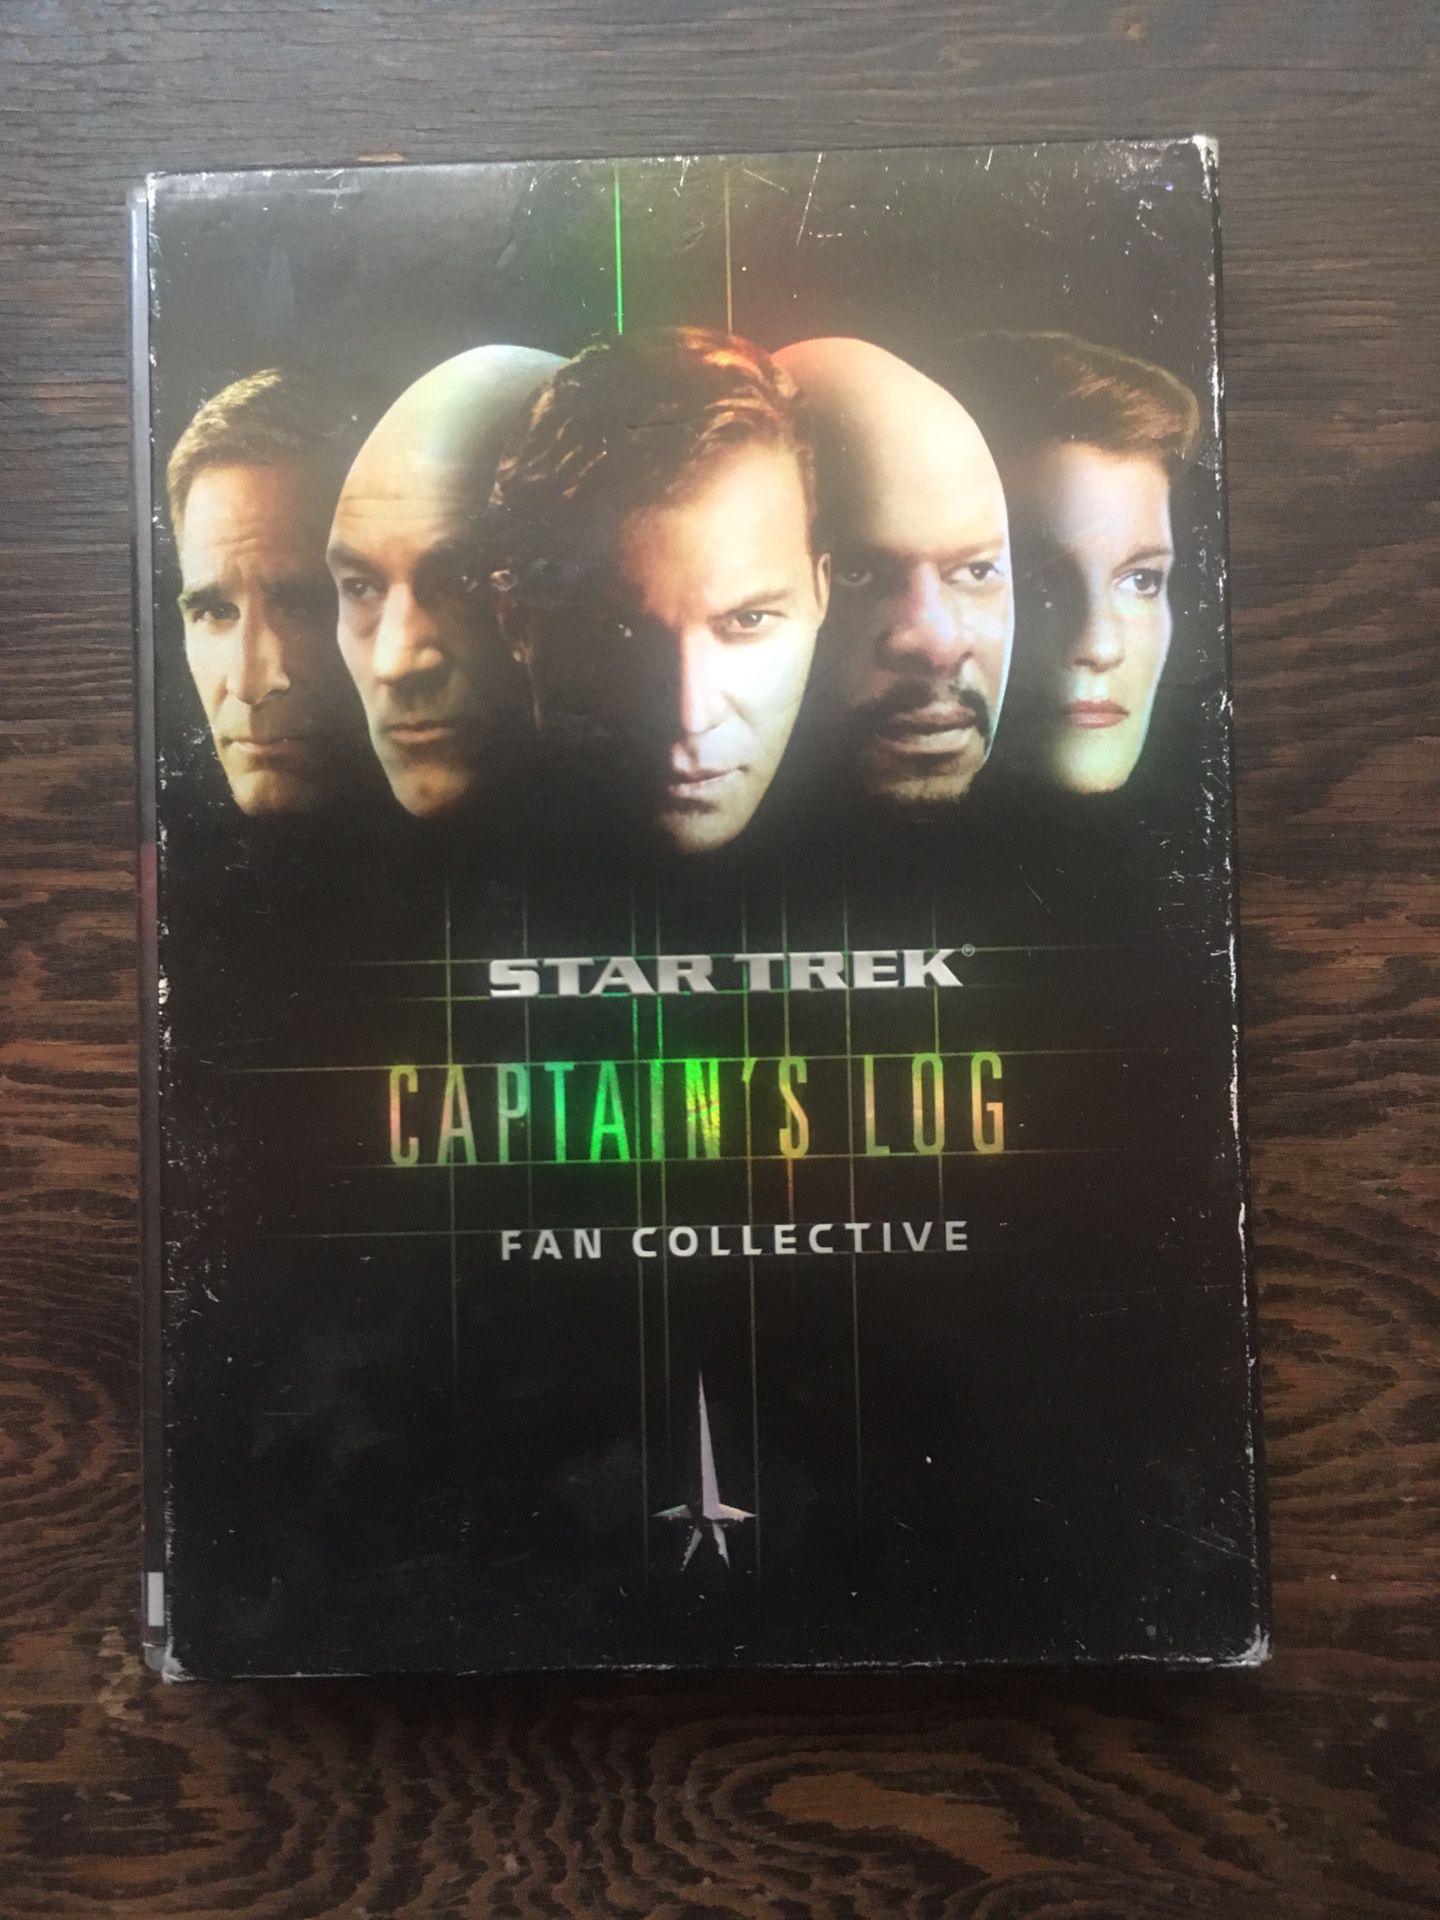 Star Trek captains log